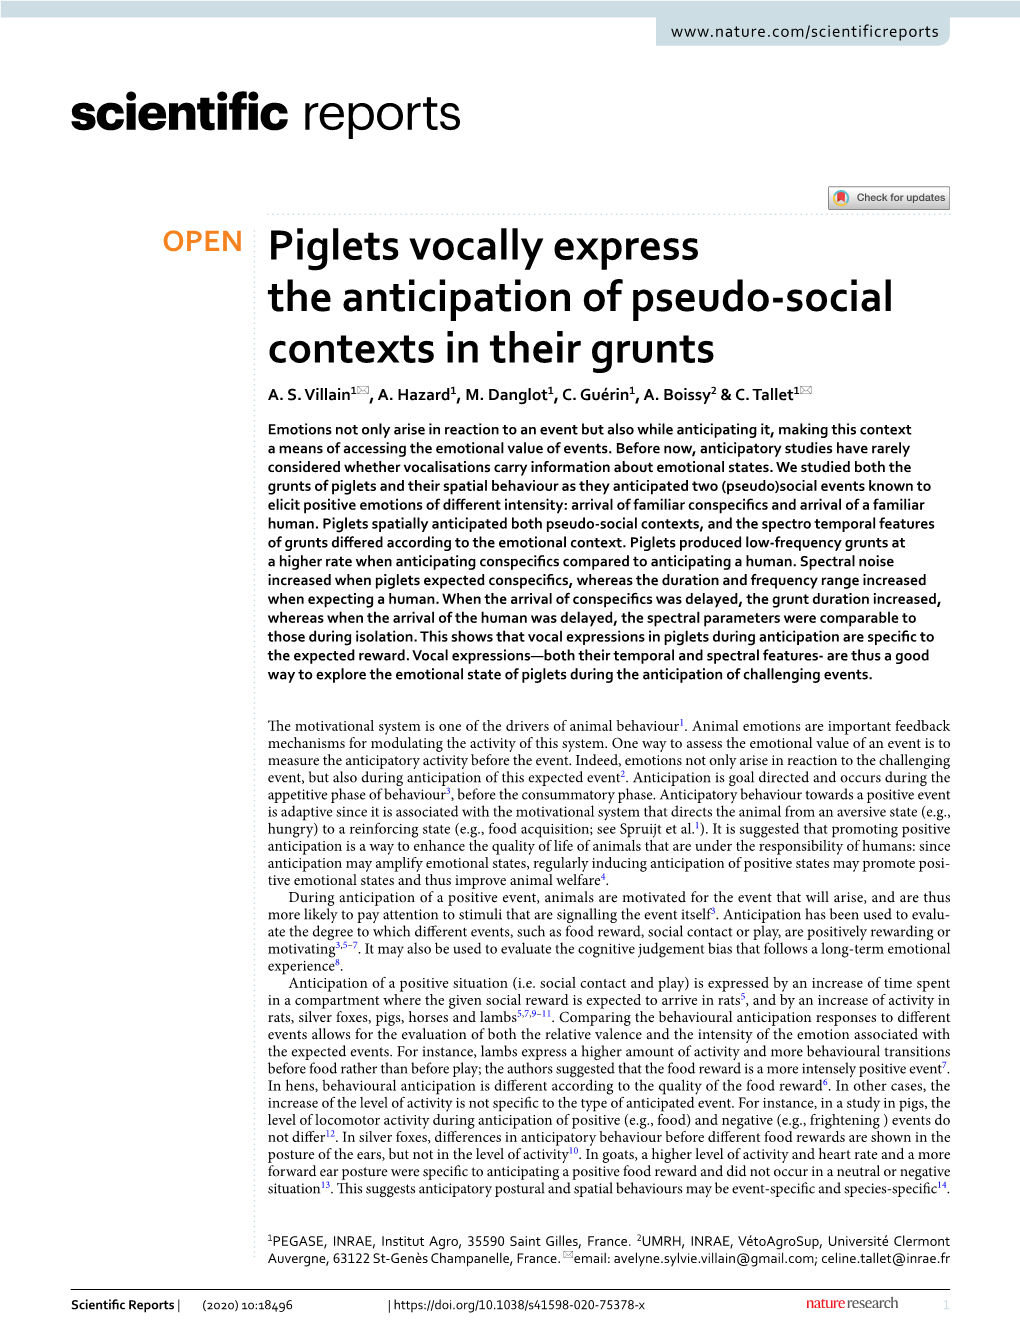 Piglets Vocally Express the Anticipation of Pseudo-Social